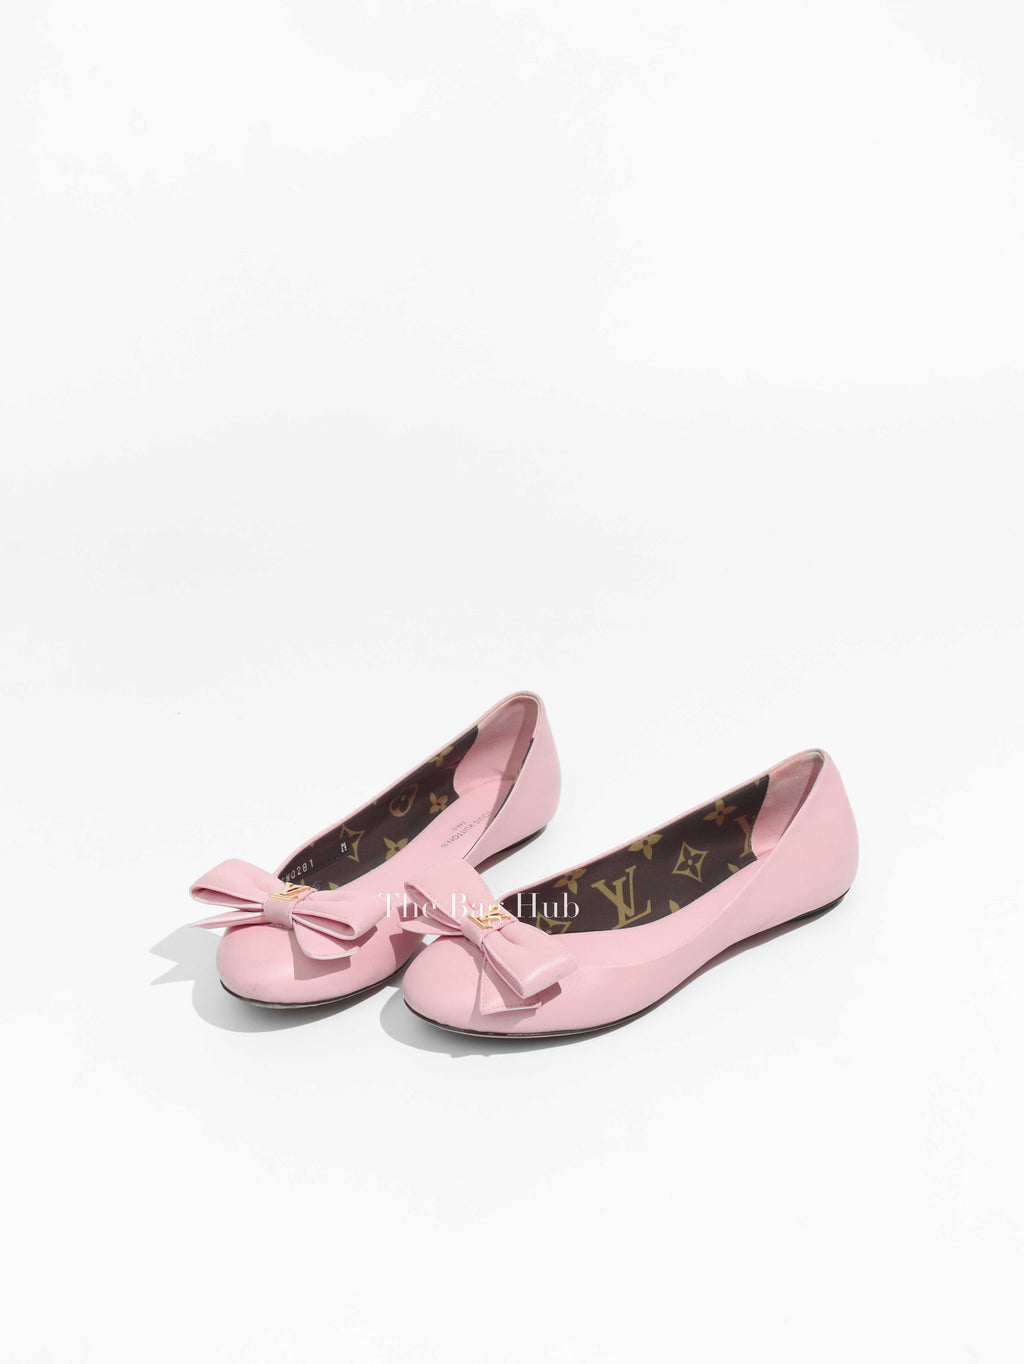 Louis Vuitton Pink Leather Popi Flats Size 35